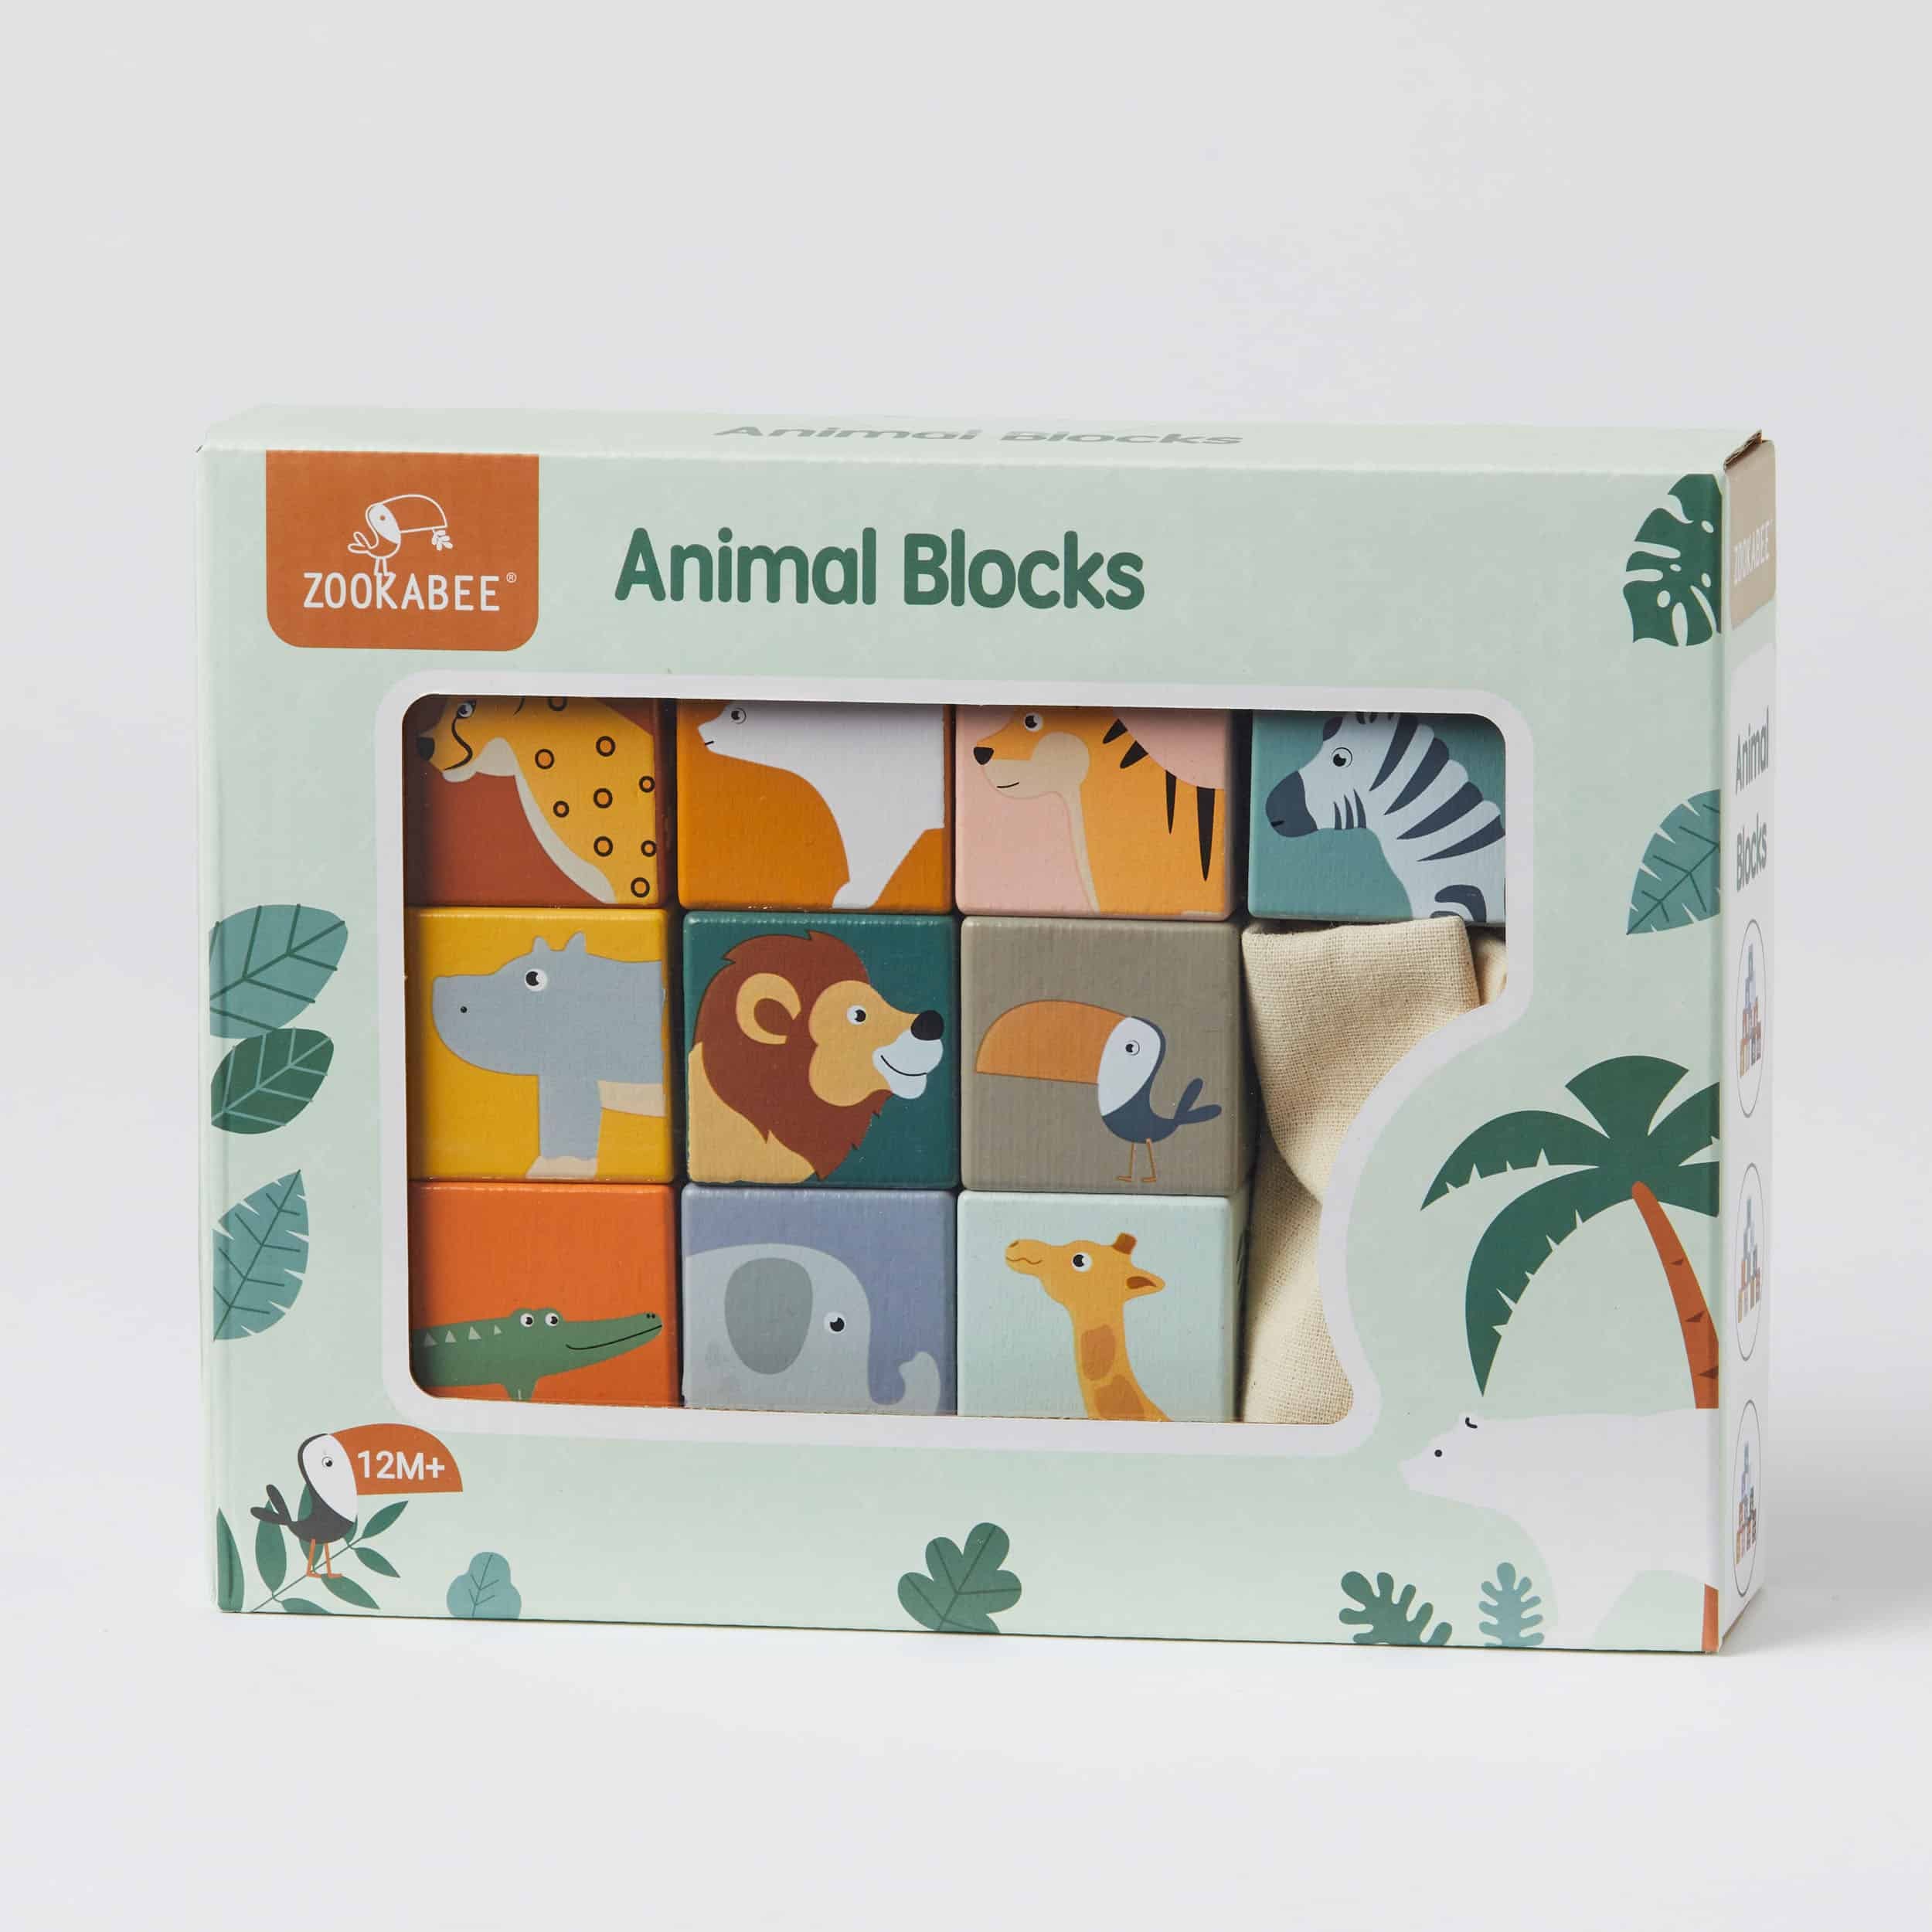 Zookabee - Animal Blocks